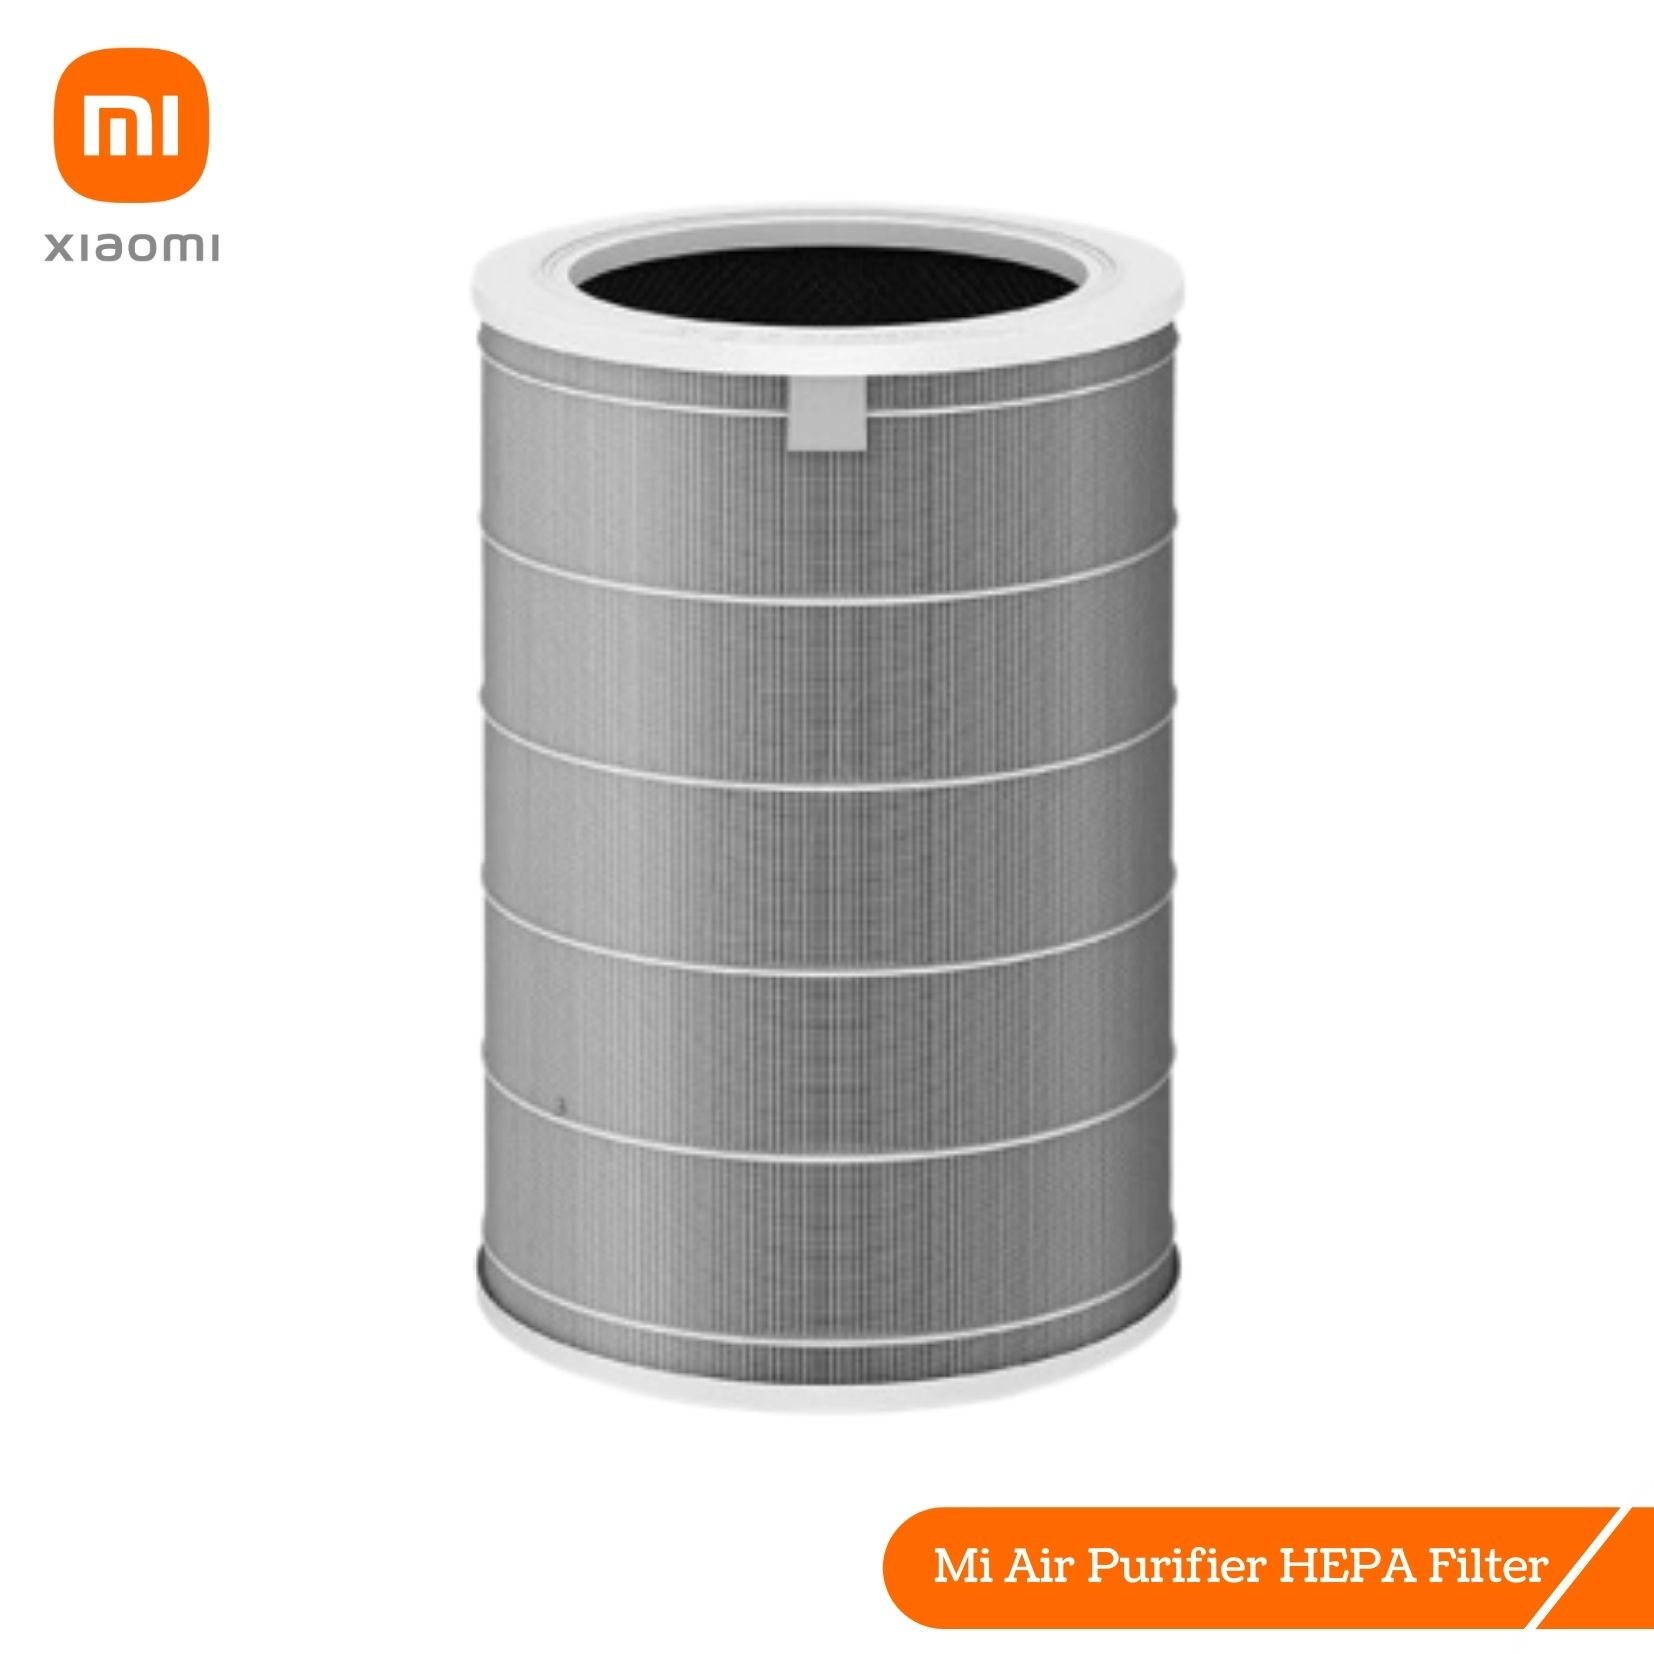 Xiaomi Air Purifier HEPA Filter